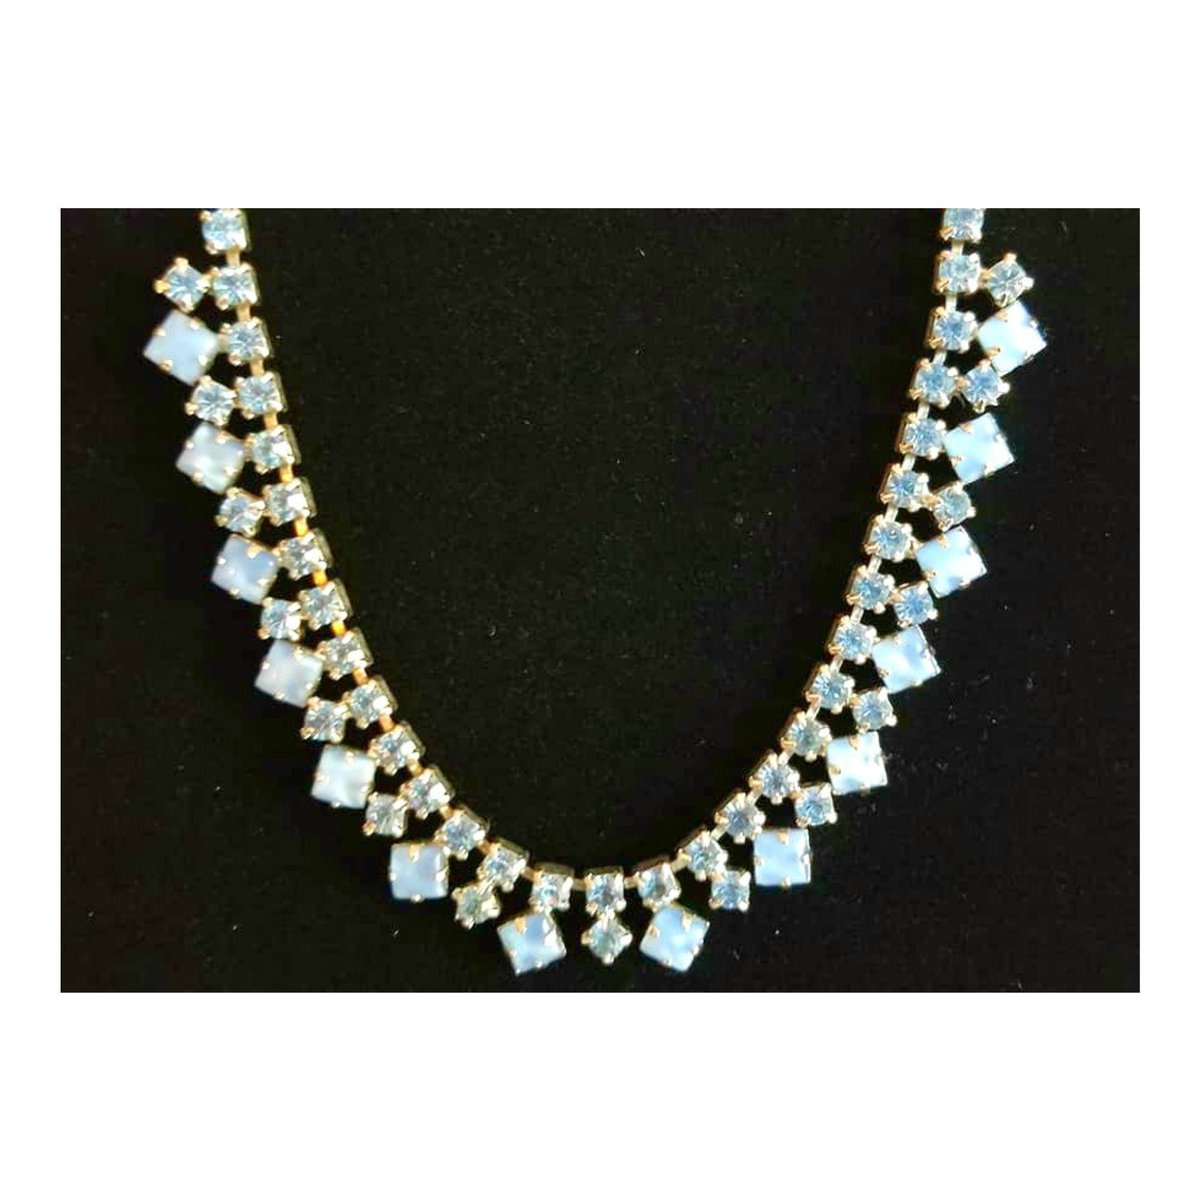 Art Deco Blue Crystal Necklace with Opaque Blue Stones etsy.me/44bJ5PA #blue #wedding #yes #hook #artdeco #statementnecklace #weddingjewelry #estatejewelry #rhinestonenecklace